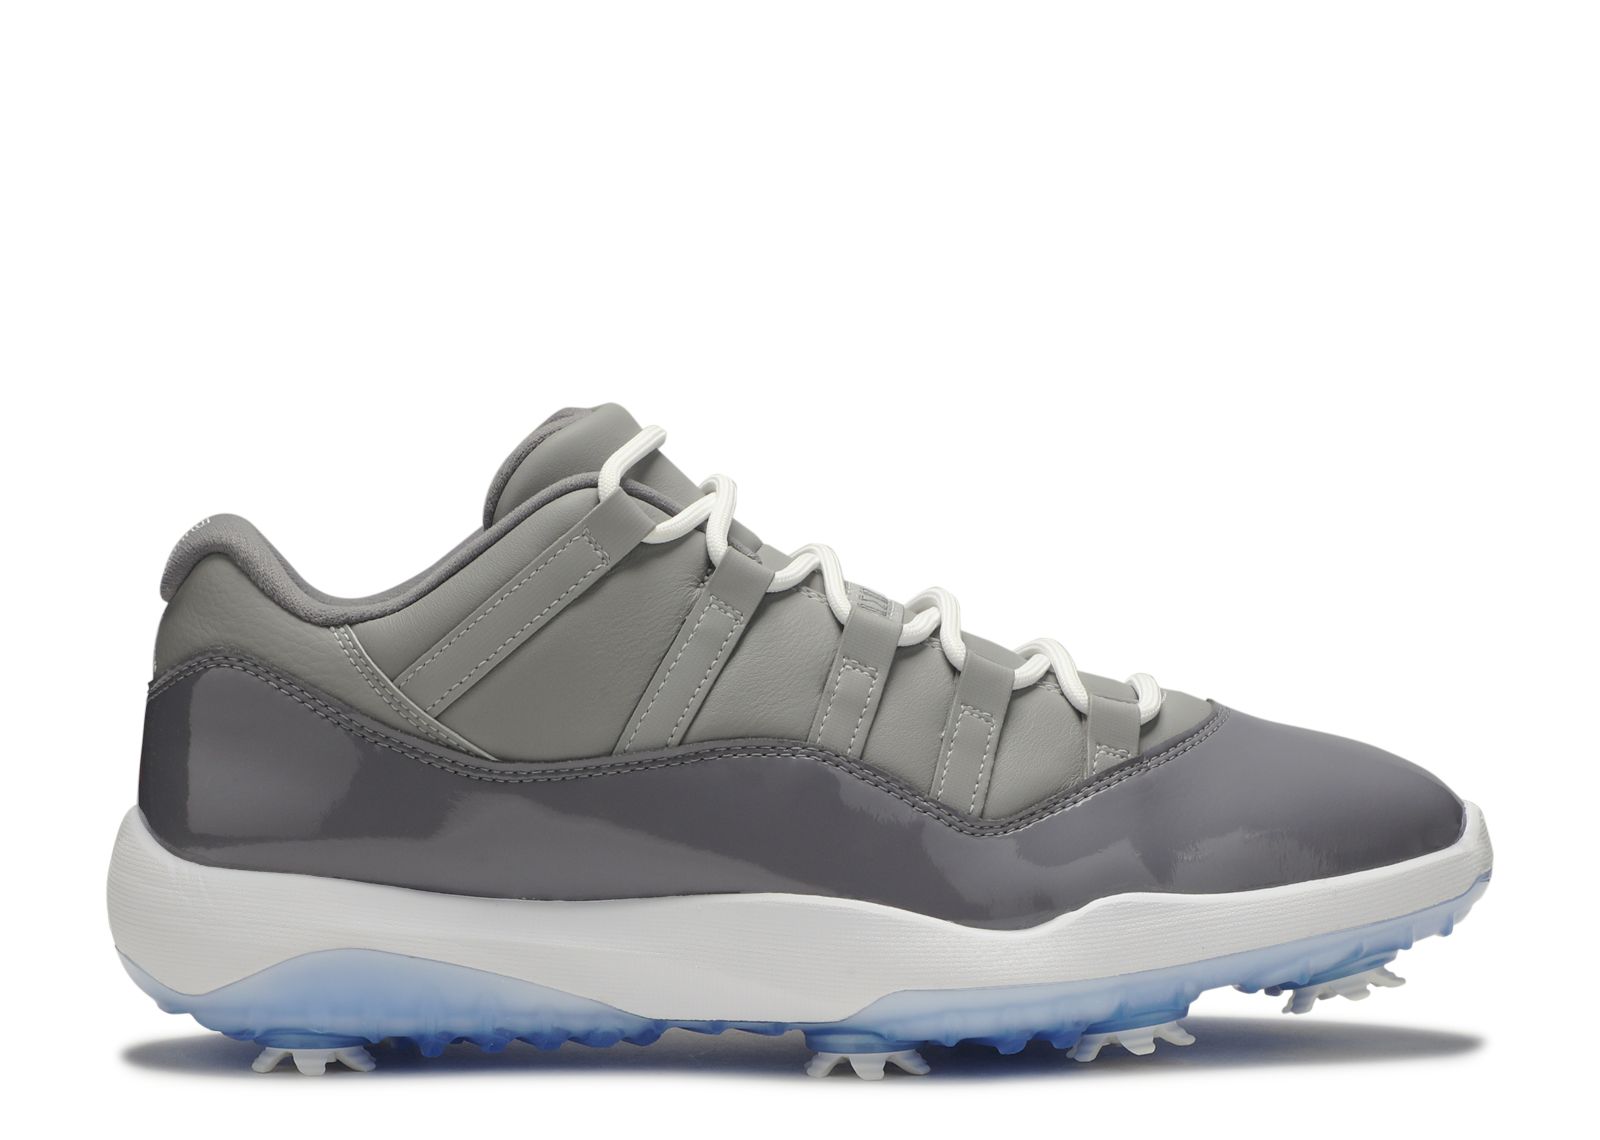 cool grey jordan 11 golf shoes